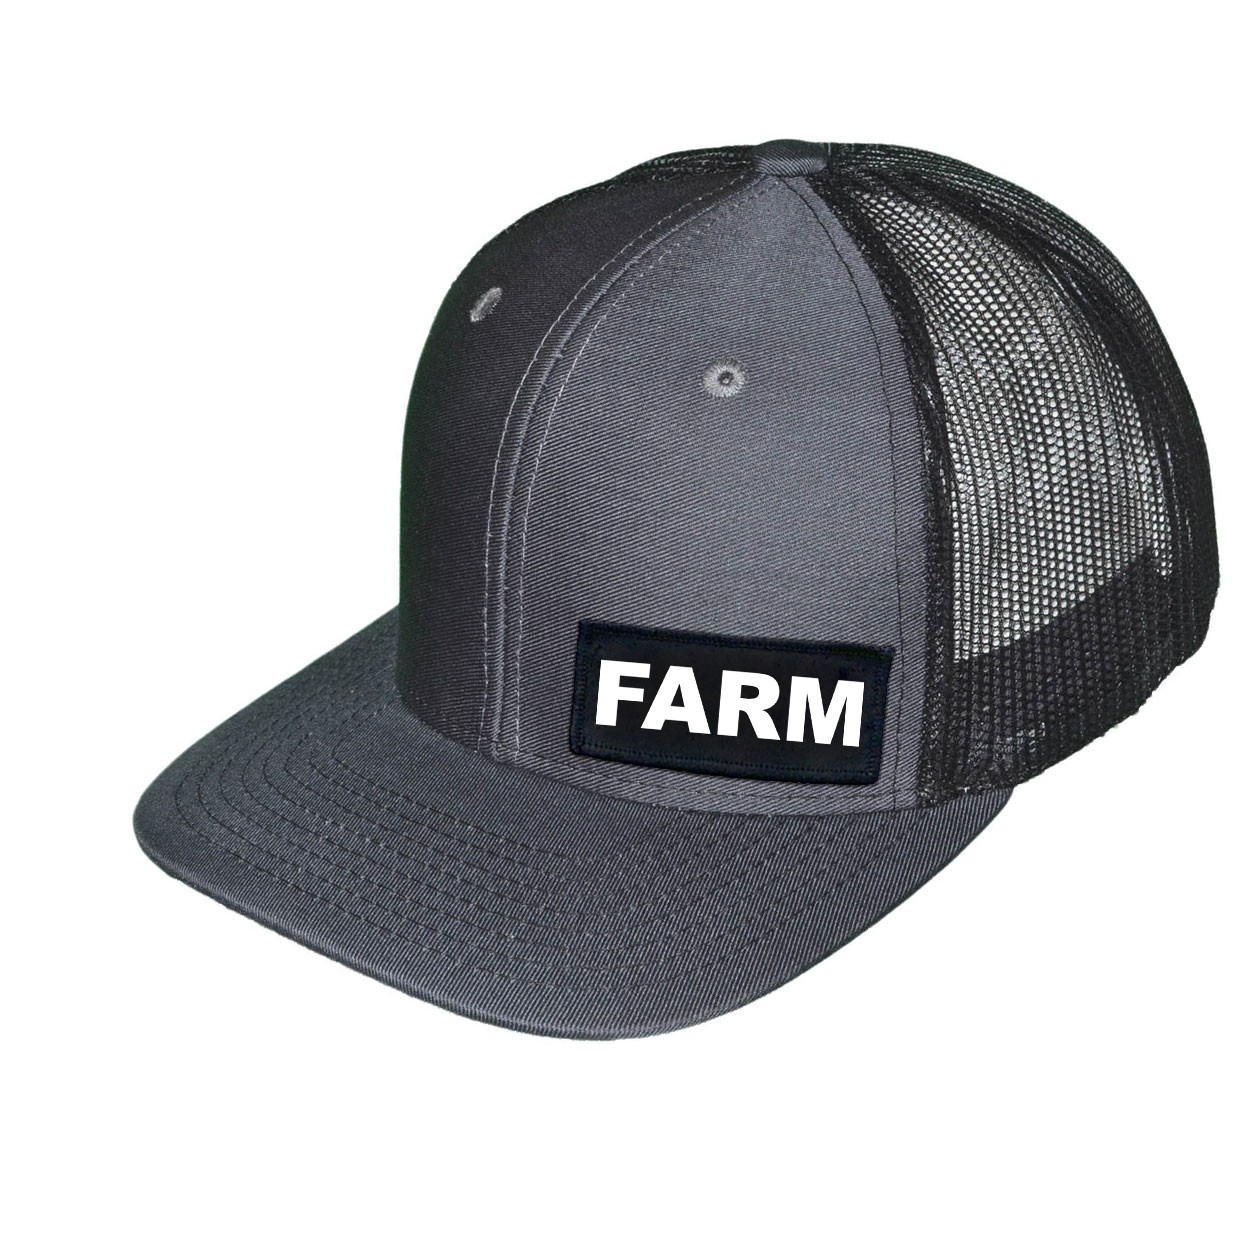 Farm Brand Logo Night Out Woven Patch Snapback Trucker Hat Dark Gray/Black (White Logo)